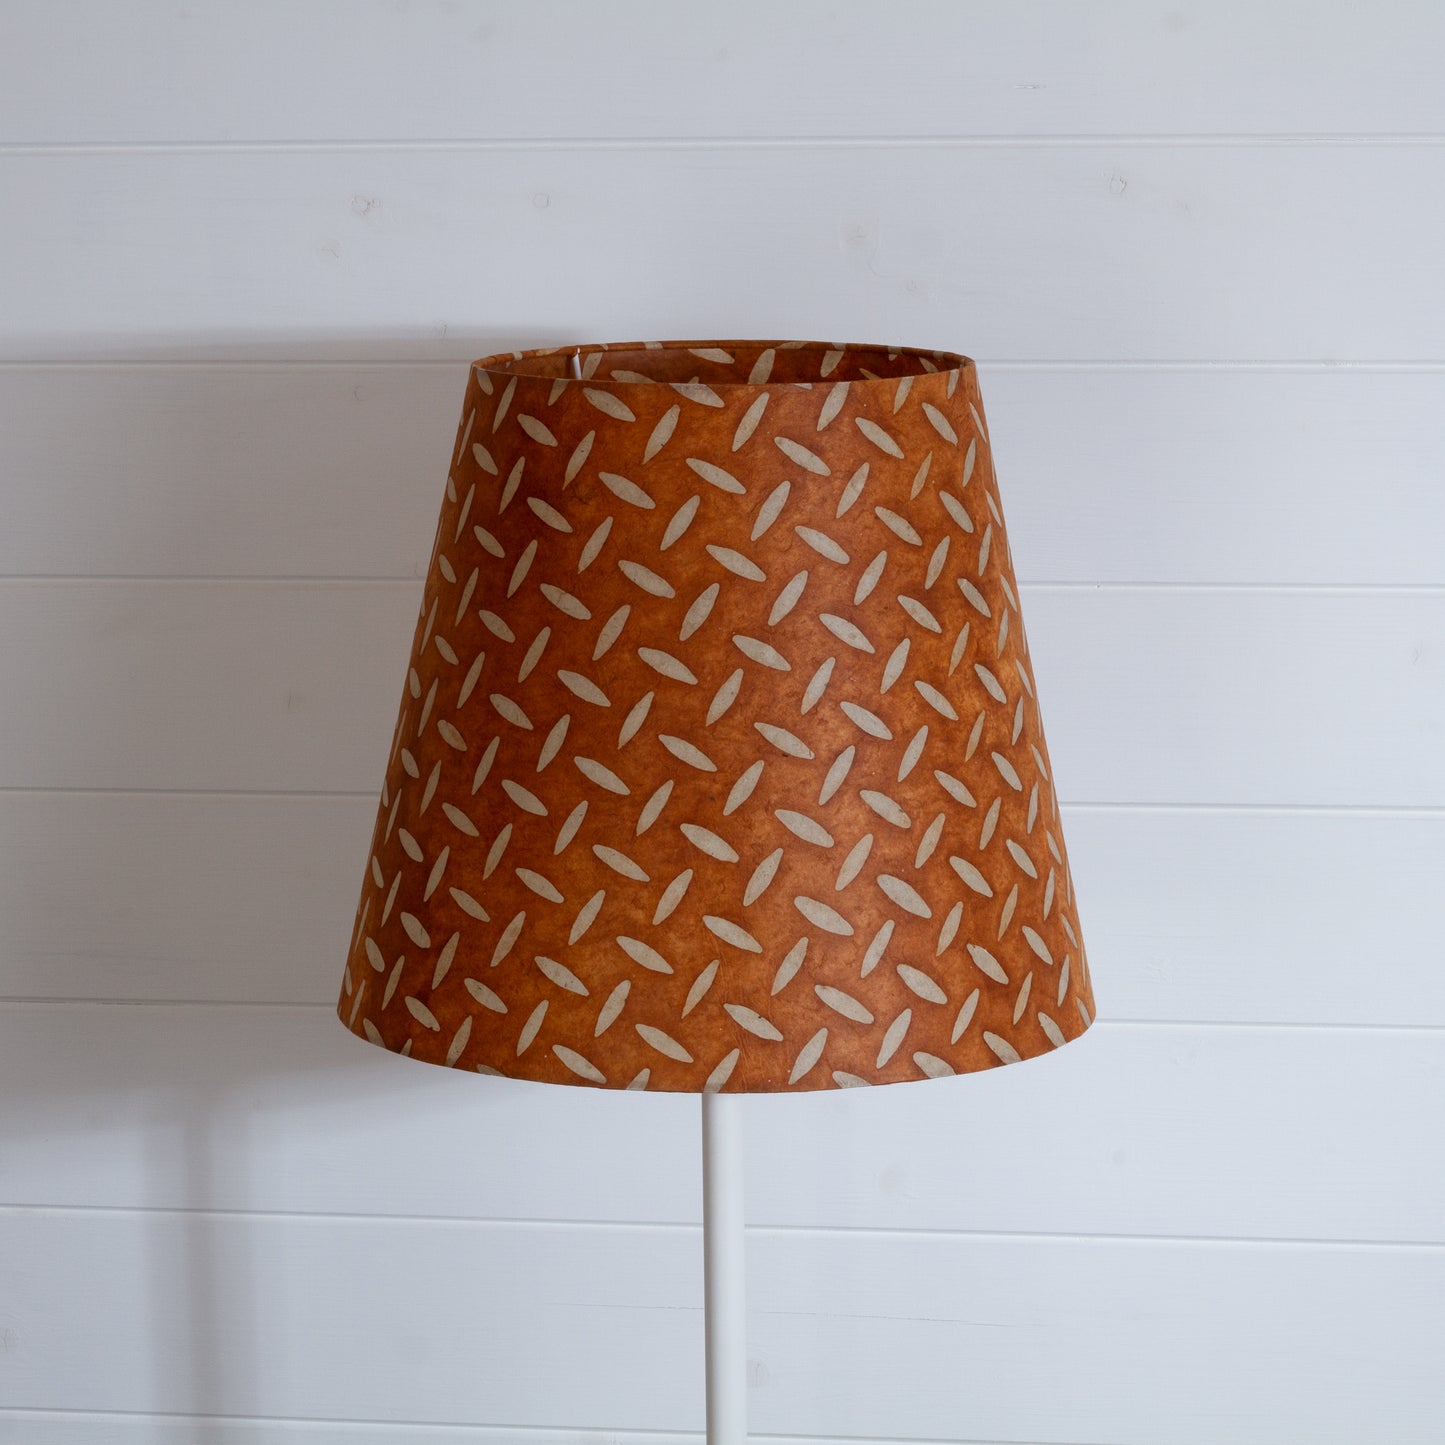 Conical Lamp Shade P12 - Batik Tread Plate Brown, 23cm(top) x 35cm(bottom) x 31cm(height)